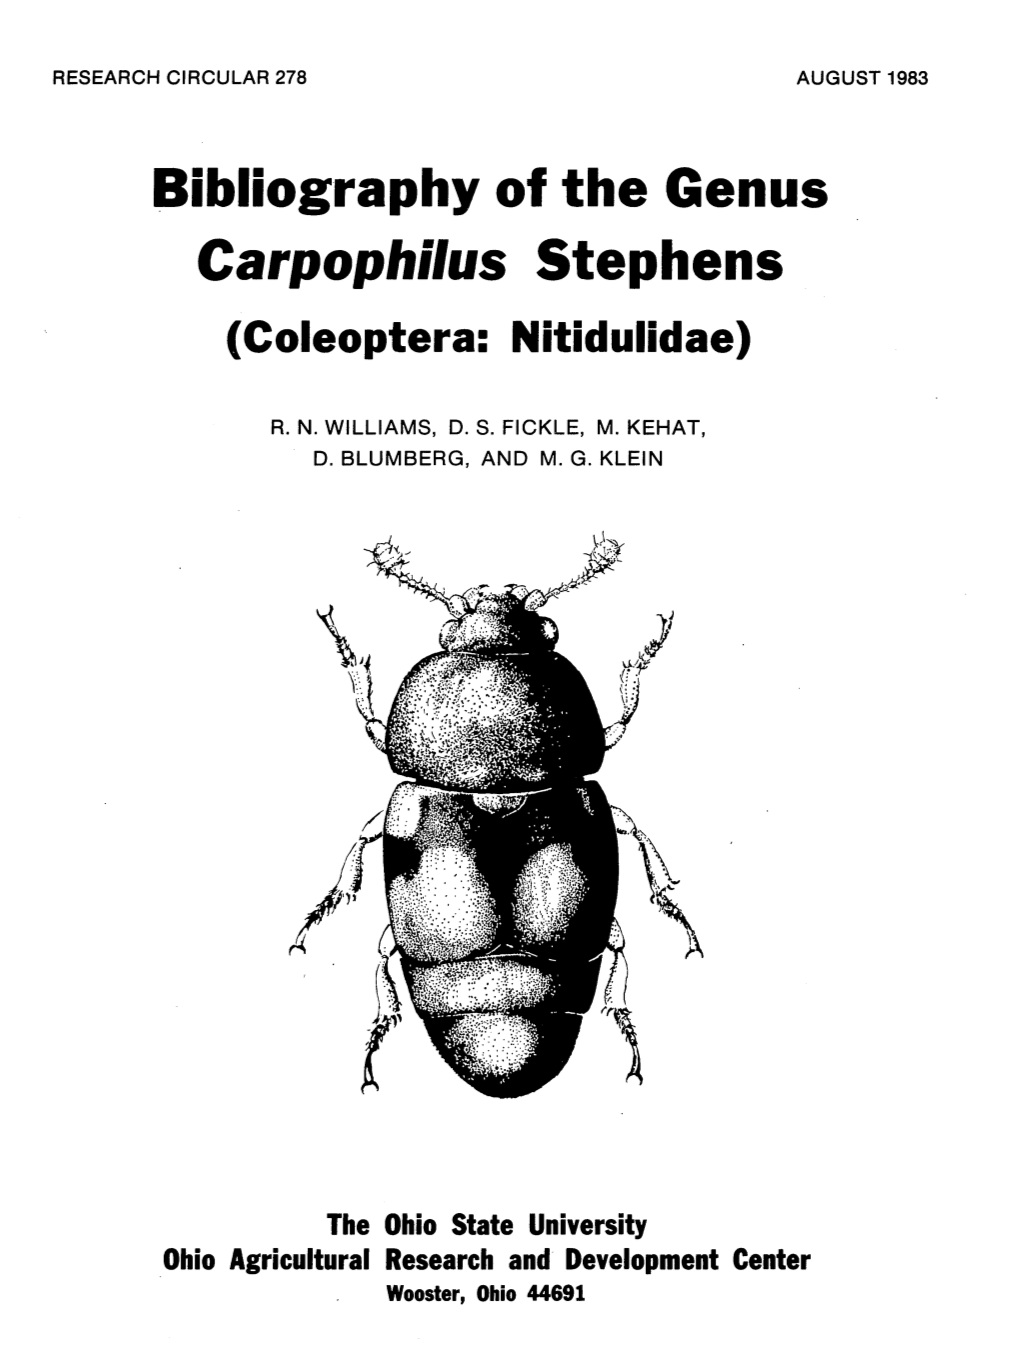 Carpophhus Stephens ( Coleoptera: Nitidulidae)